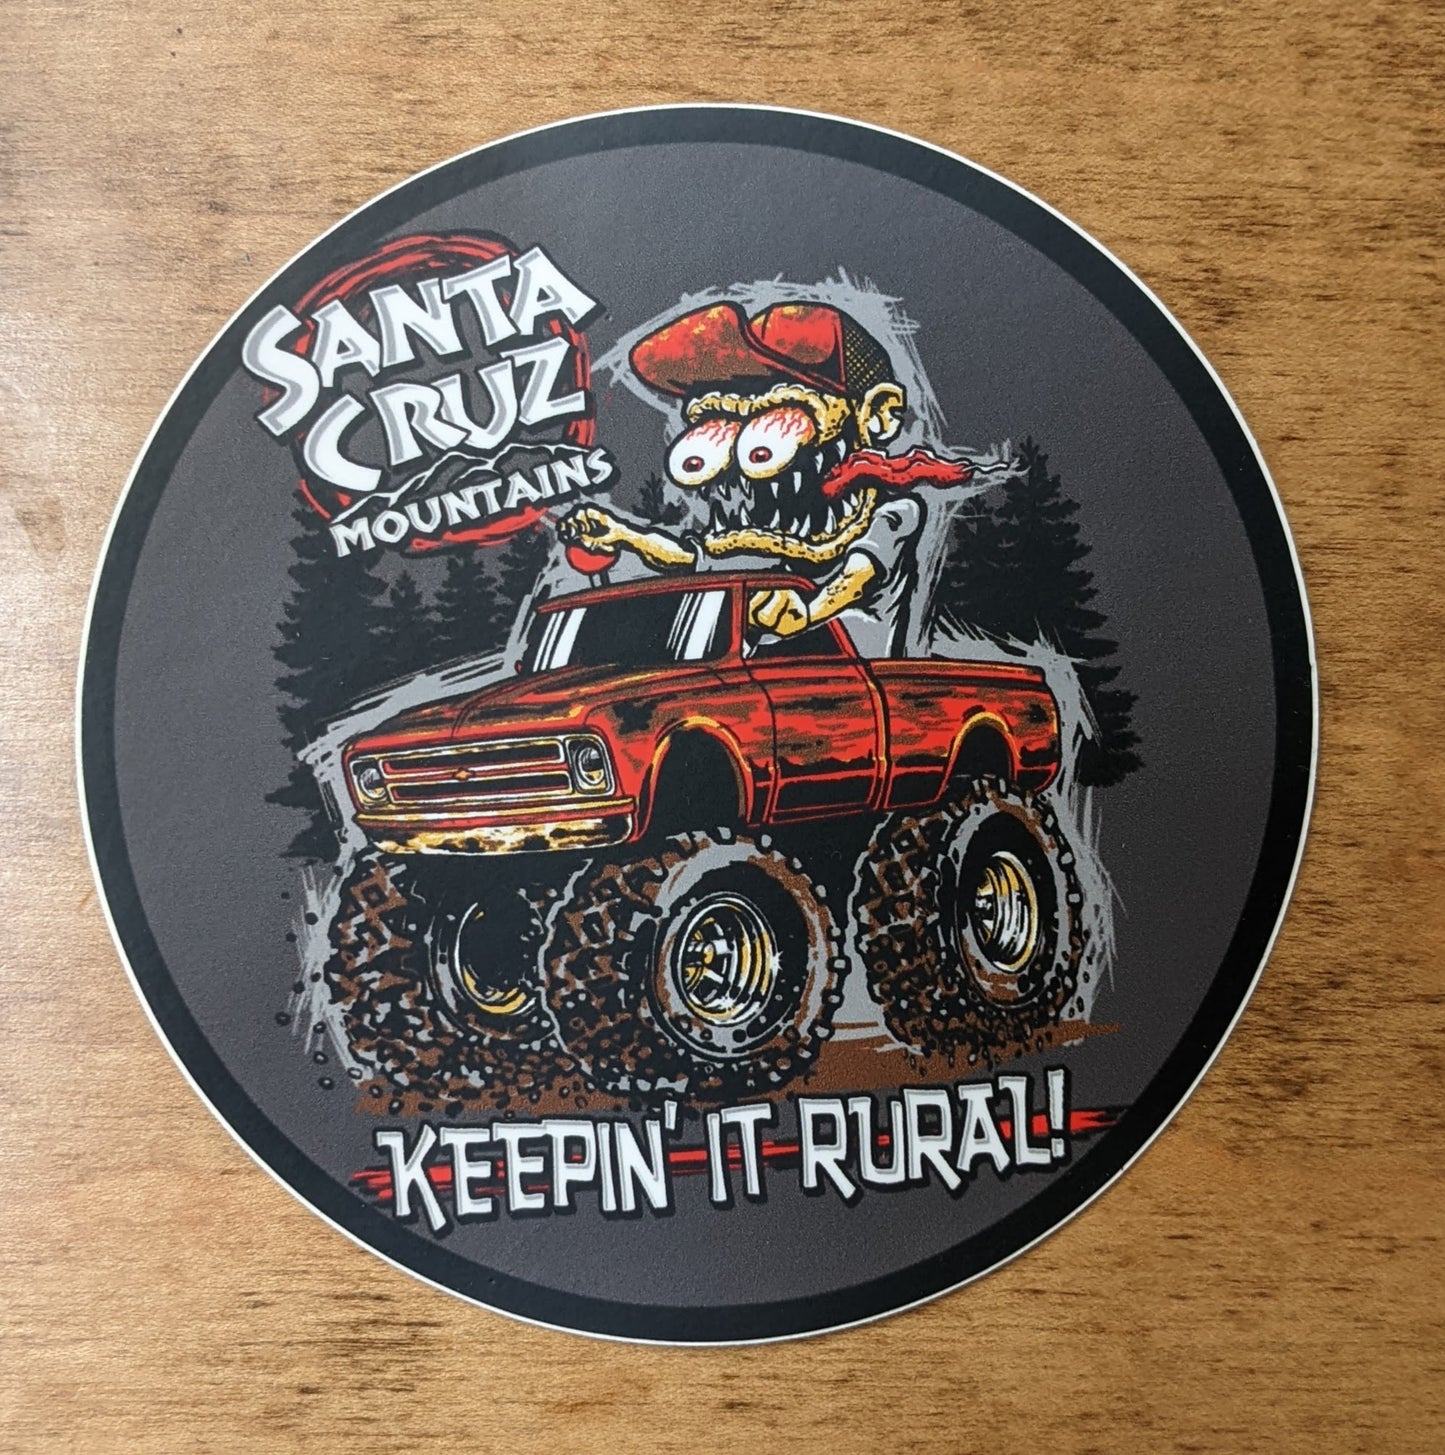 Round Santa Cruz Mountains, Keepin' It Rural! monster truck sticker, by SCM Clothing